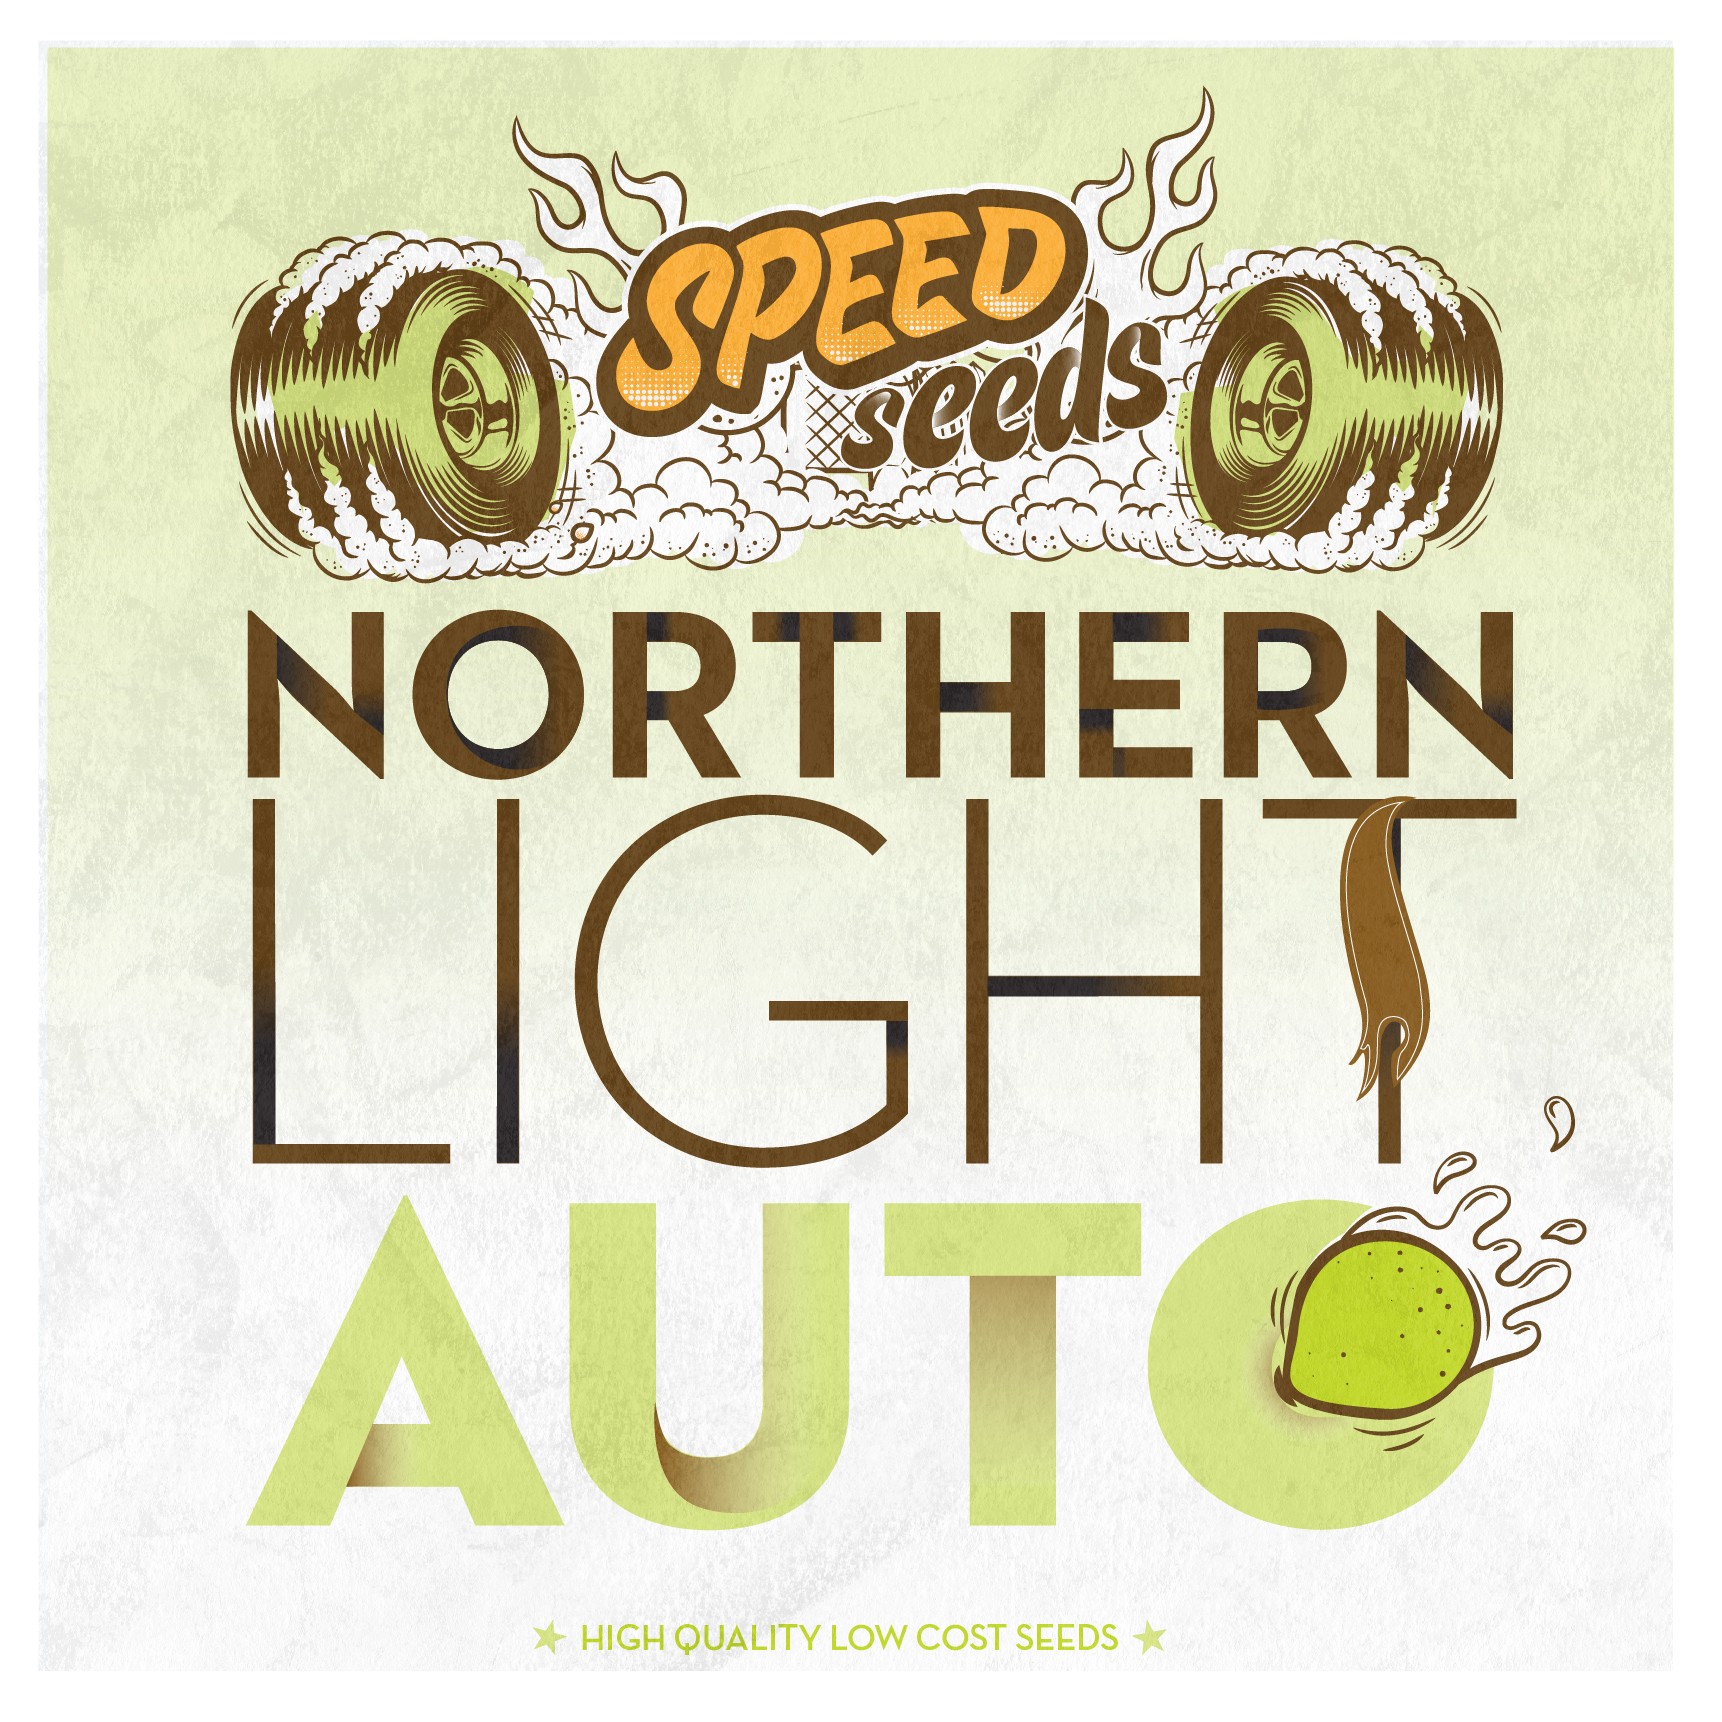 Northern Light Auto Speed Seeds Semilla feminizada marihuana barata granel